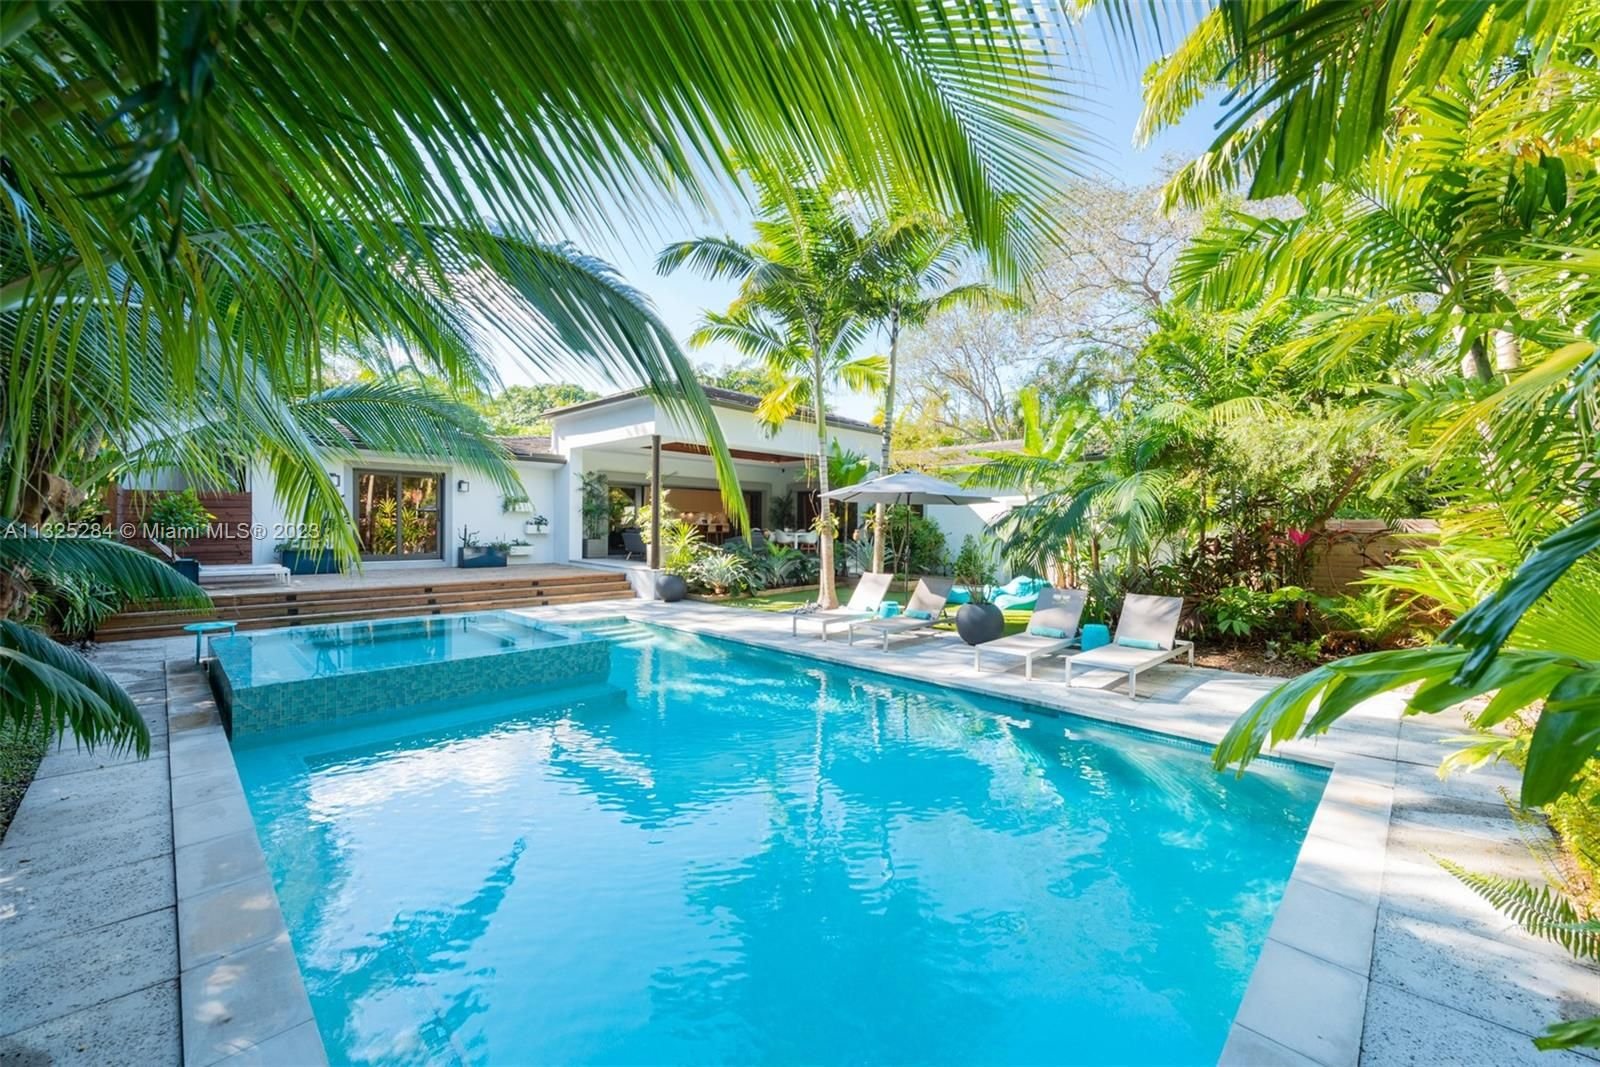 Real estate property located at 445 94th St, Miami-Dade County, Miami Shores, FL